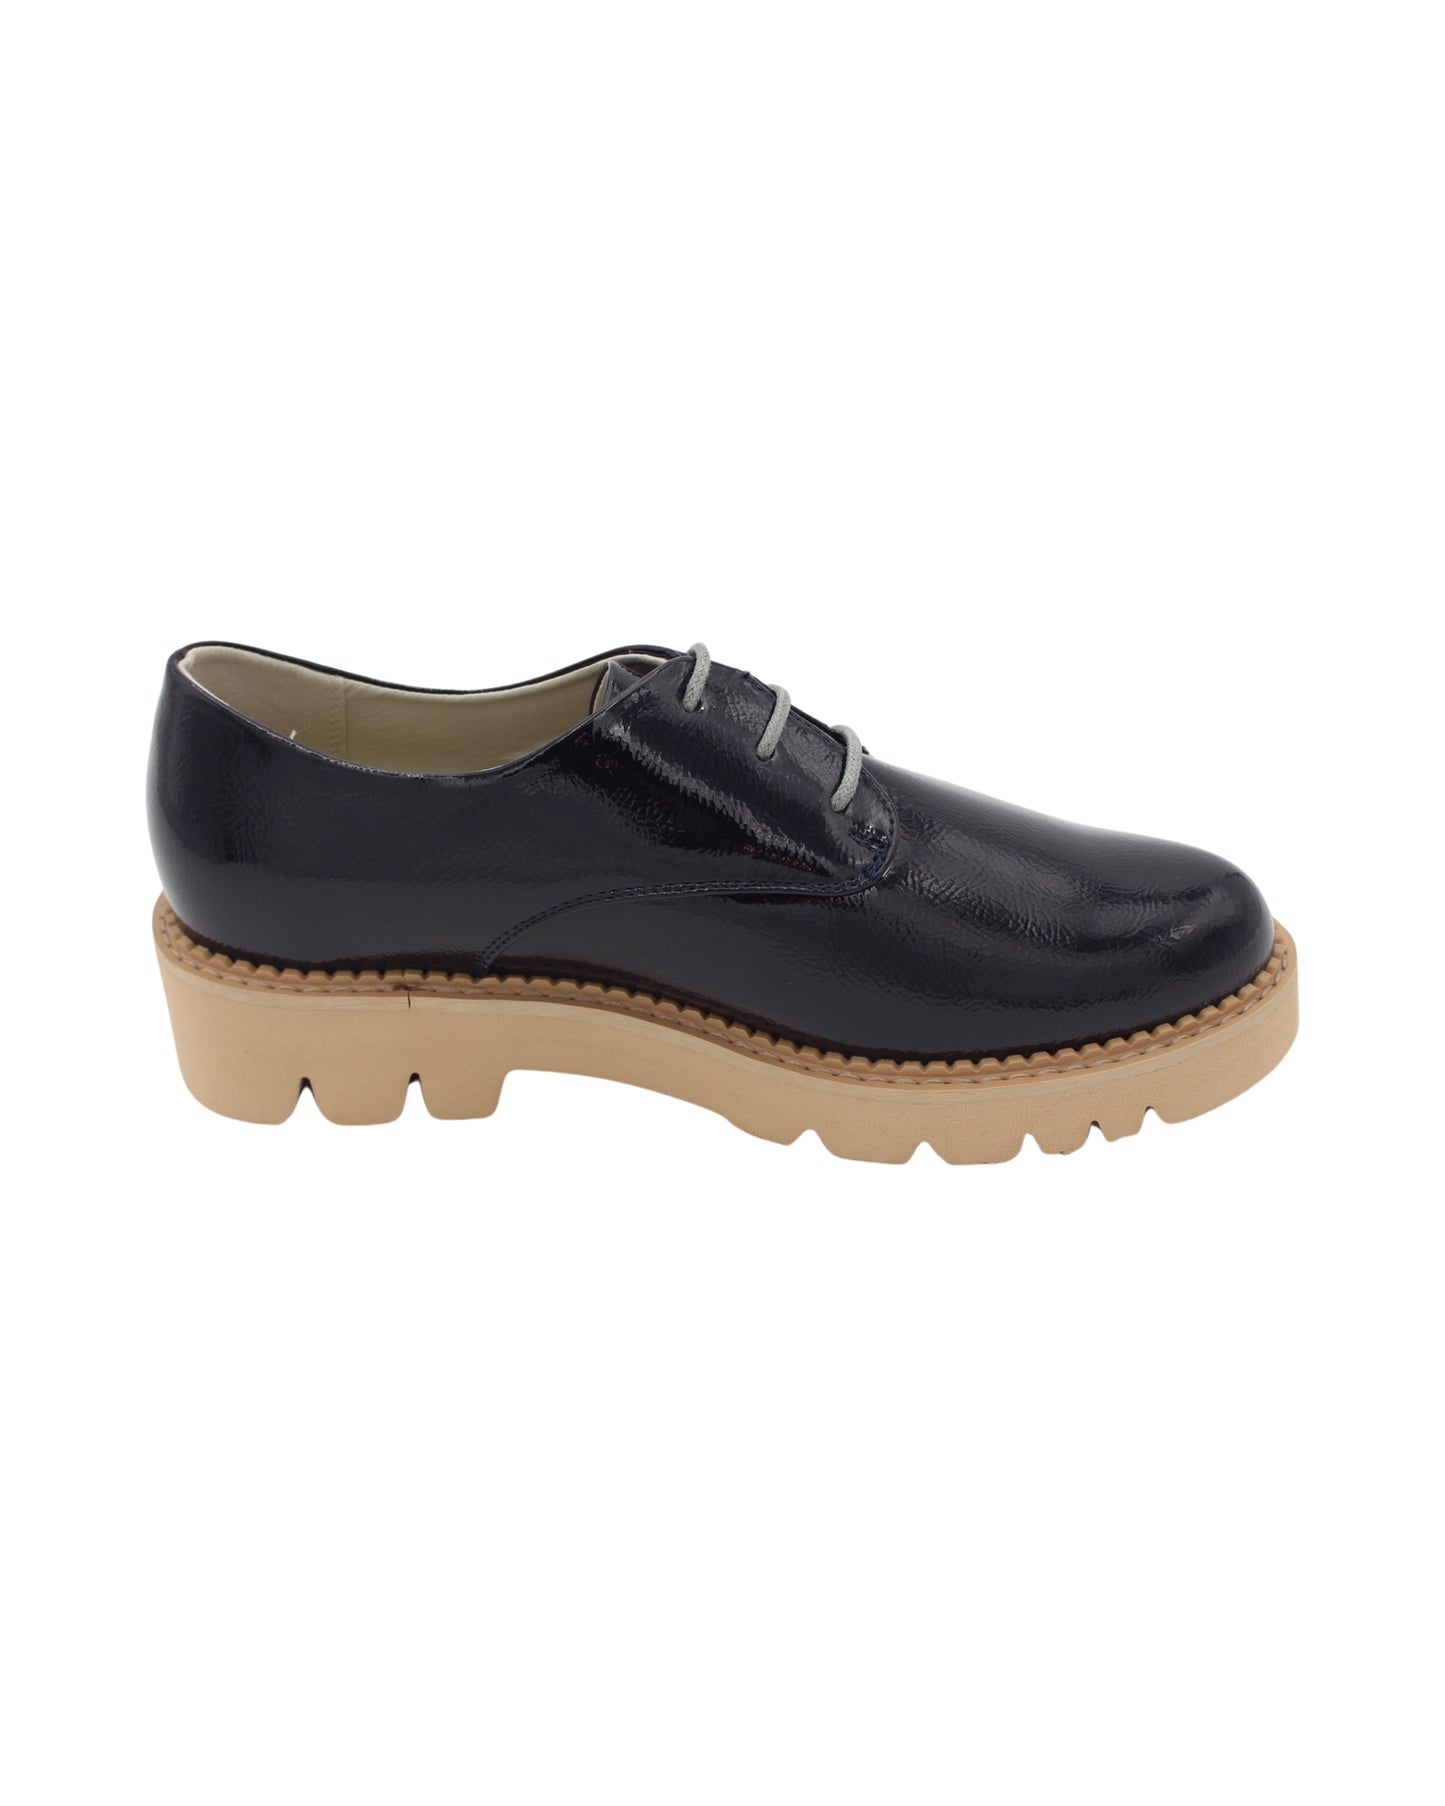 Zanni - Ladies Shoes Brogues Navy (2156)